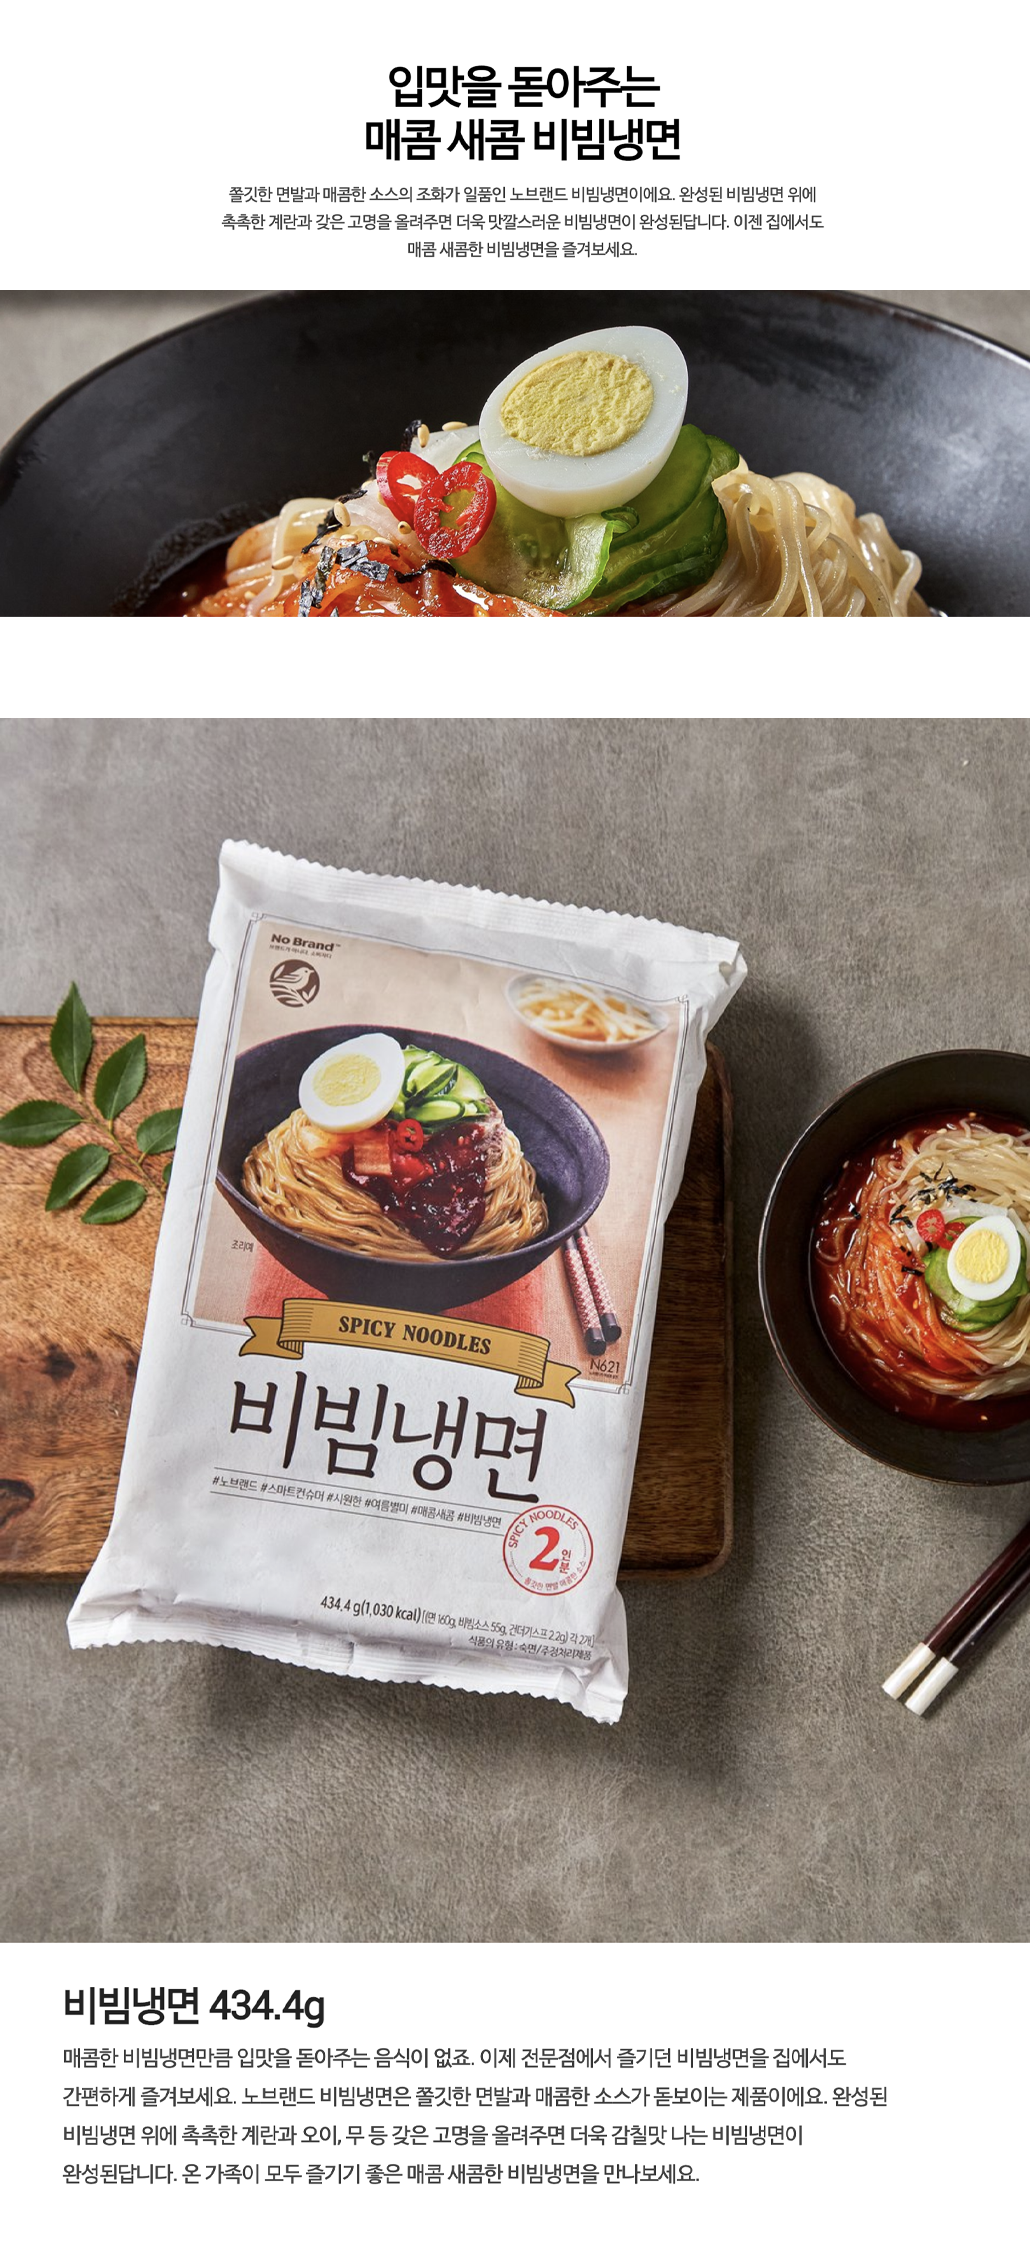 韓國食品-[No Brand] Cold Spicy Mix Noodles 434.4g